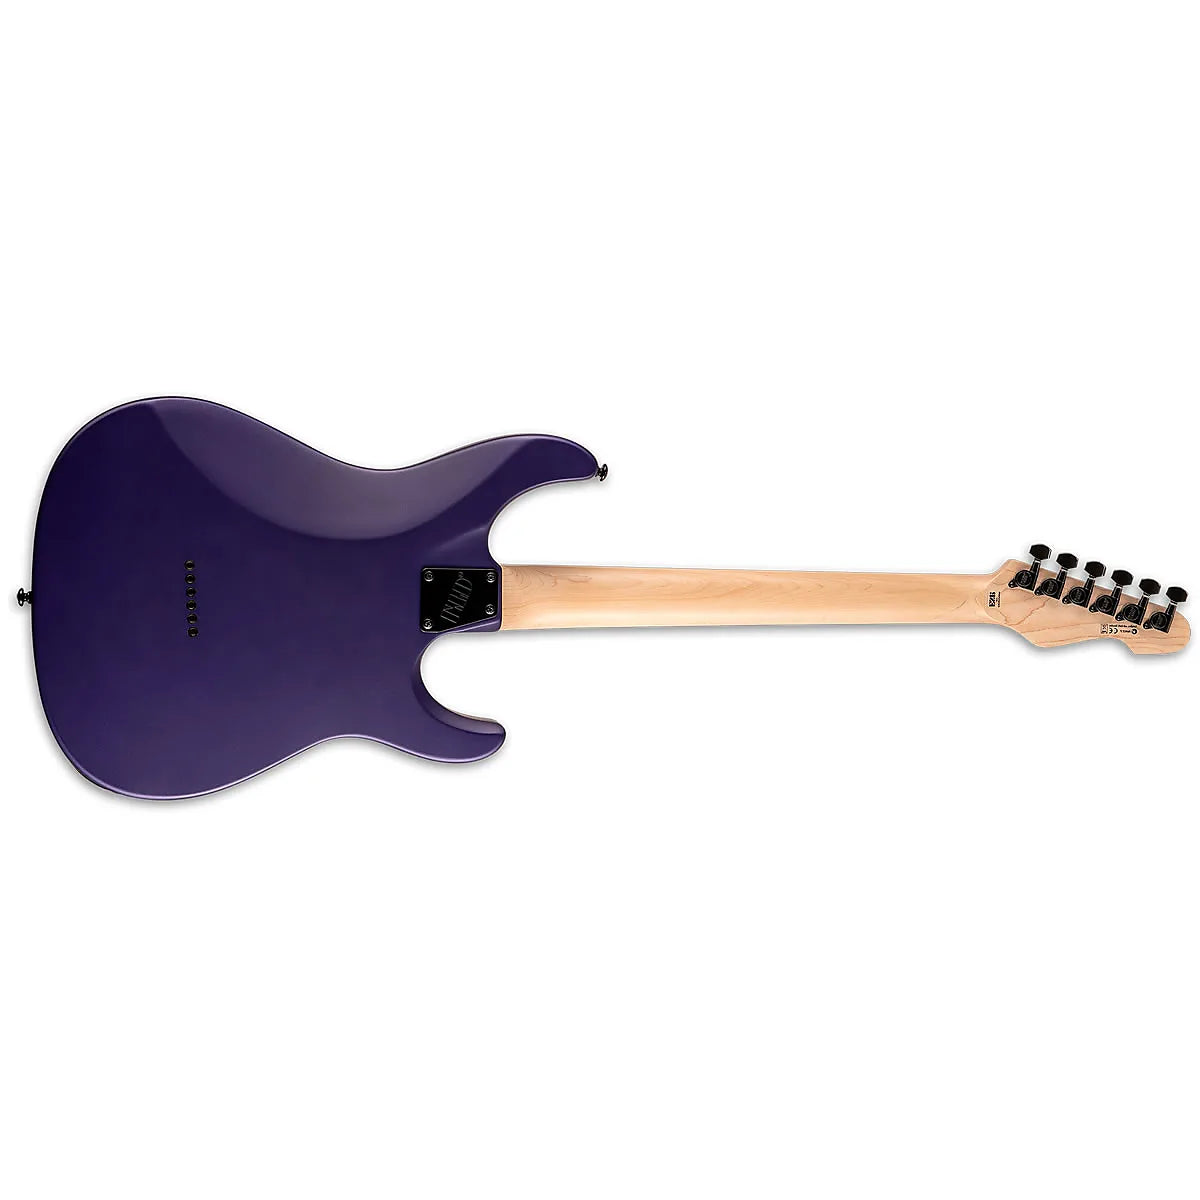 ESP LTD SN-200HT Left-Handed Electric Guitar - Dark Metallic Purple Satin